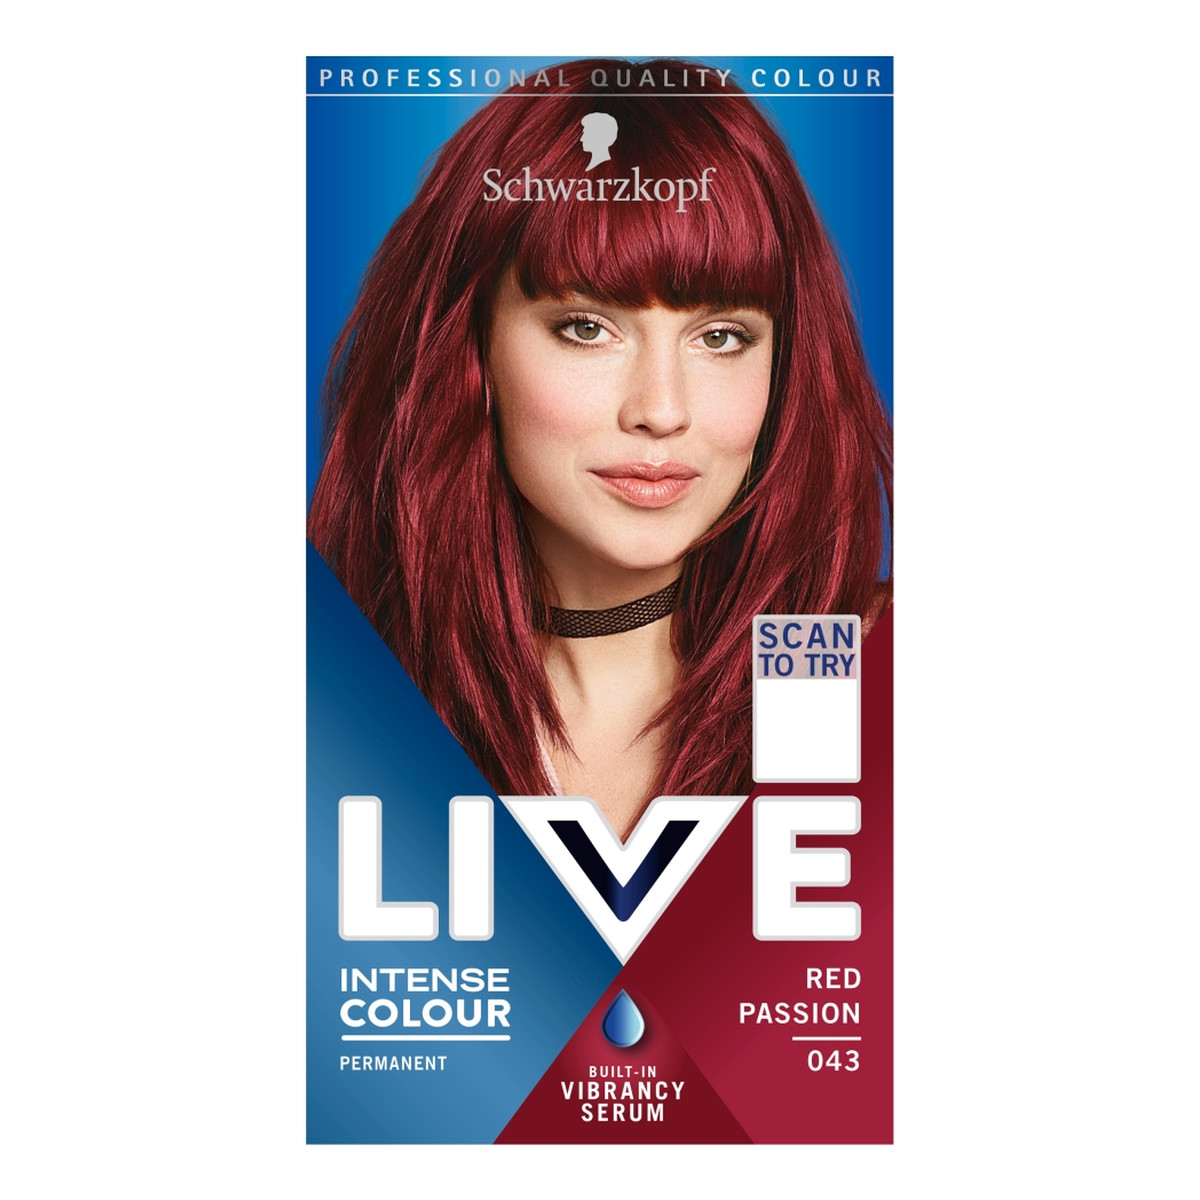 Schwarzkopf Live intense colour farba do włosów 043 red passion